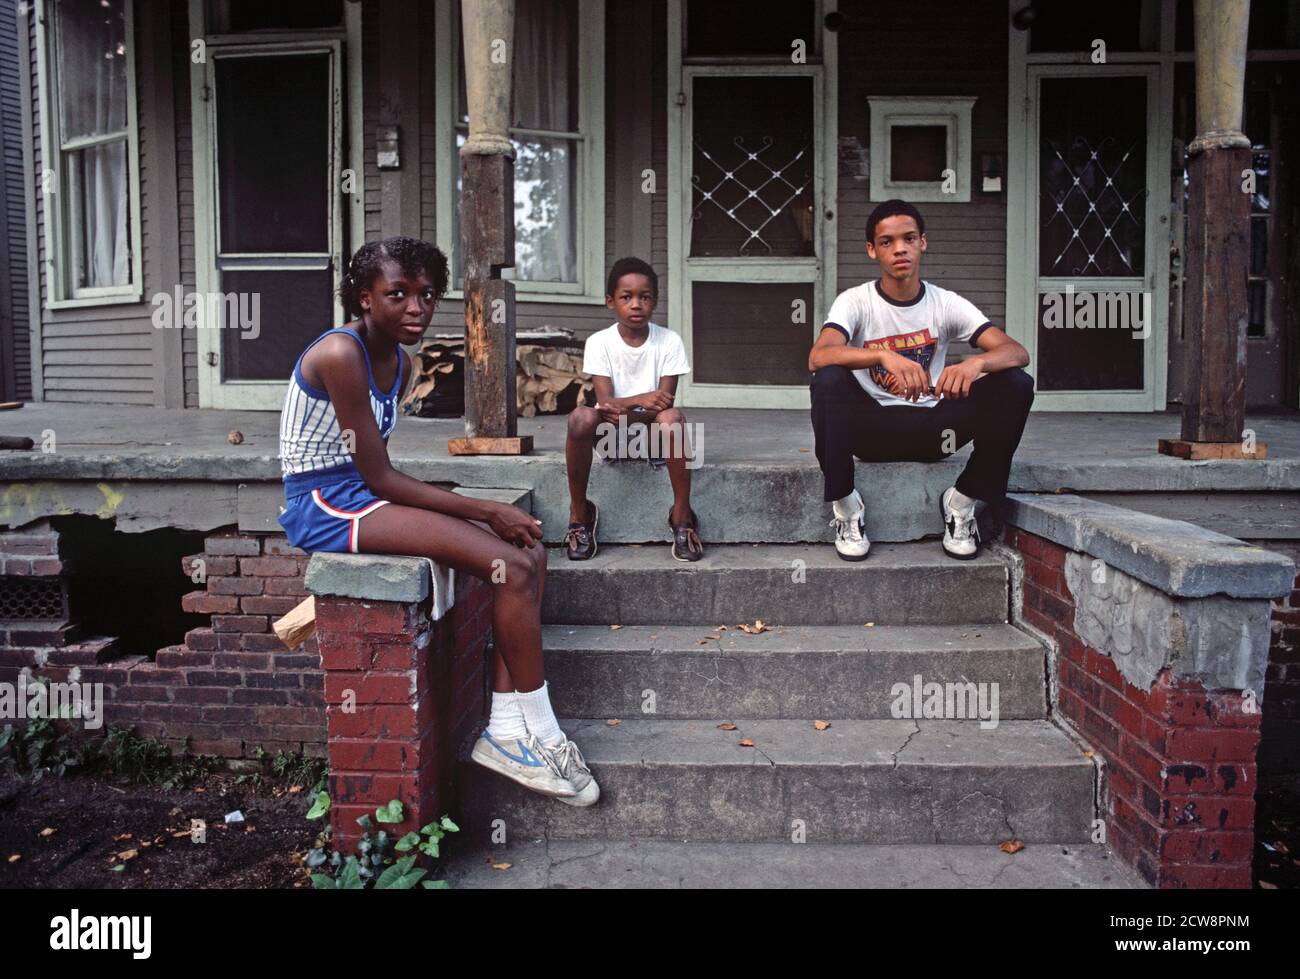 AFRICAN AMERICAN YOUTHS, DOWNTOWN SAVANNAH, GEORGIA, USA, 1980s Stock Photo